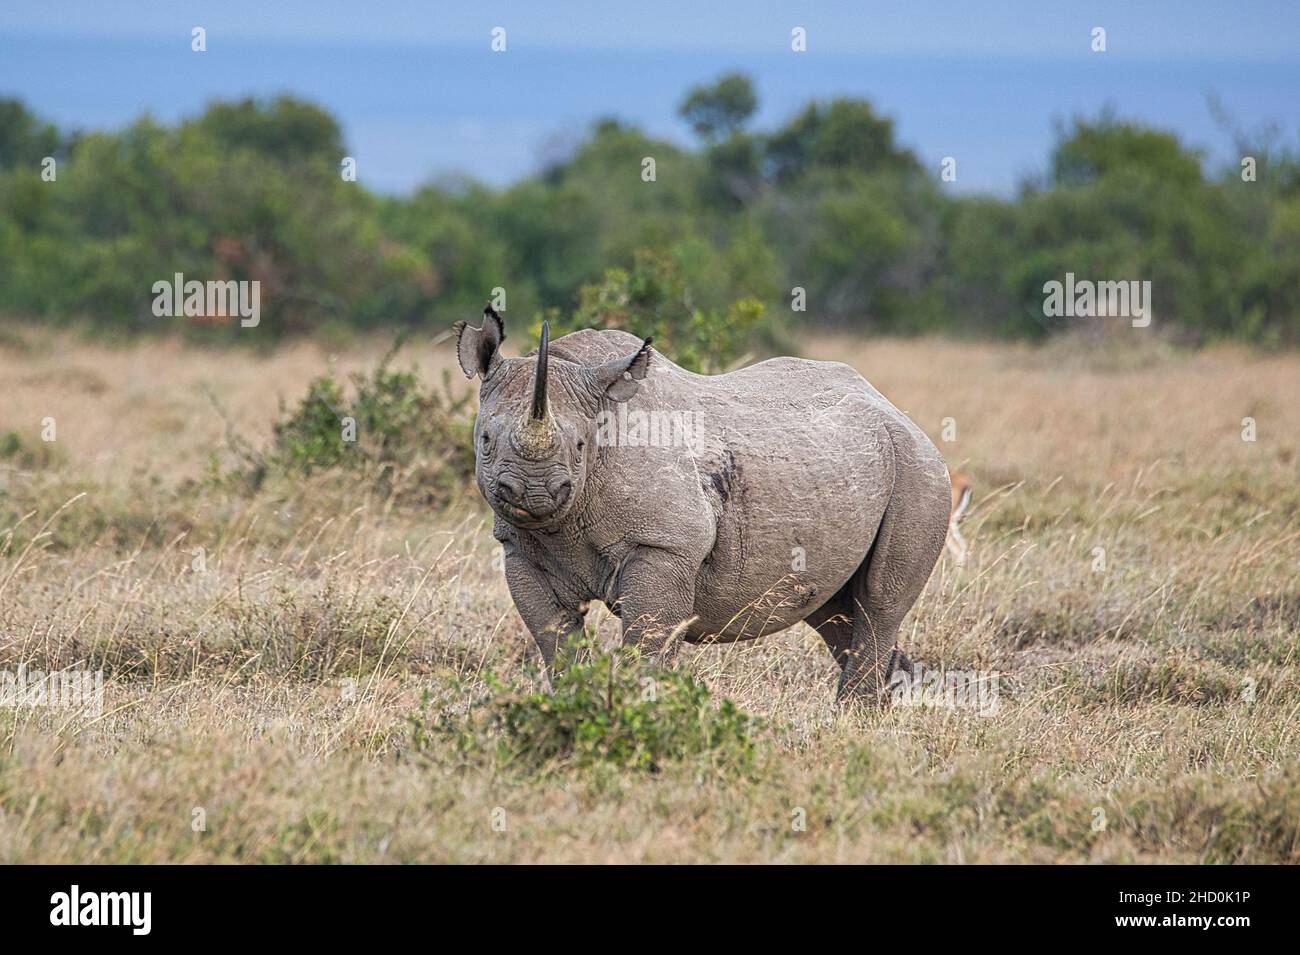 Southern white rhino, Ceratotherium simum simum, in Ol Pejeta Conservancy in Kenya. Stock Photo